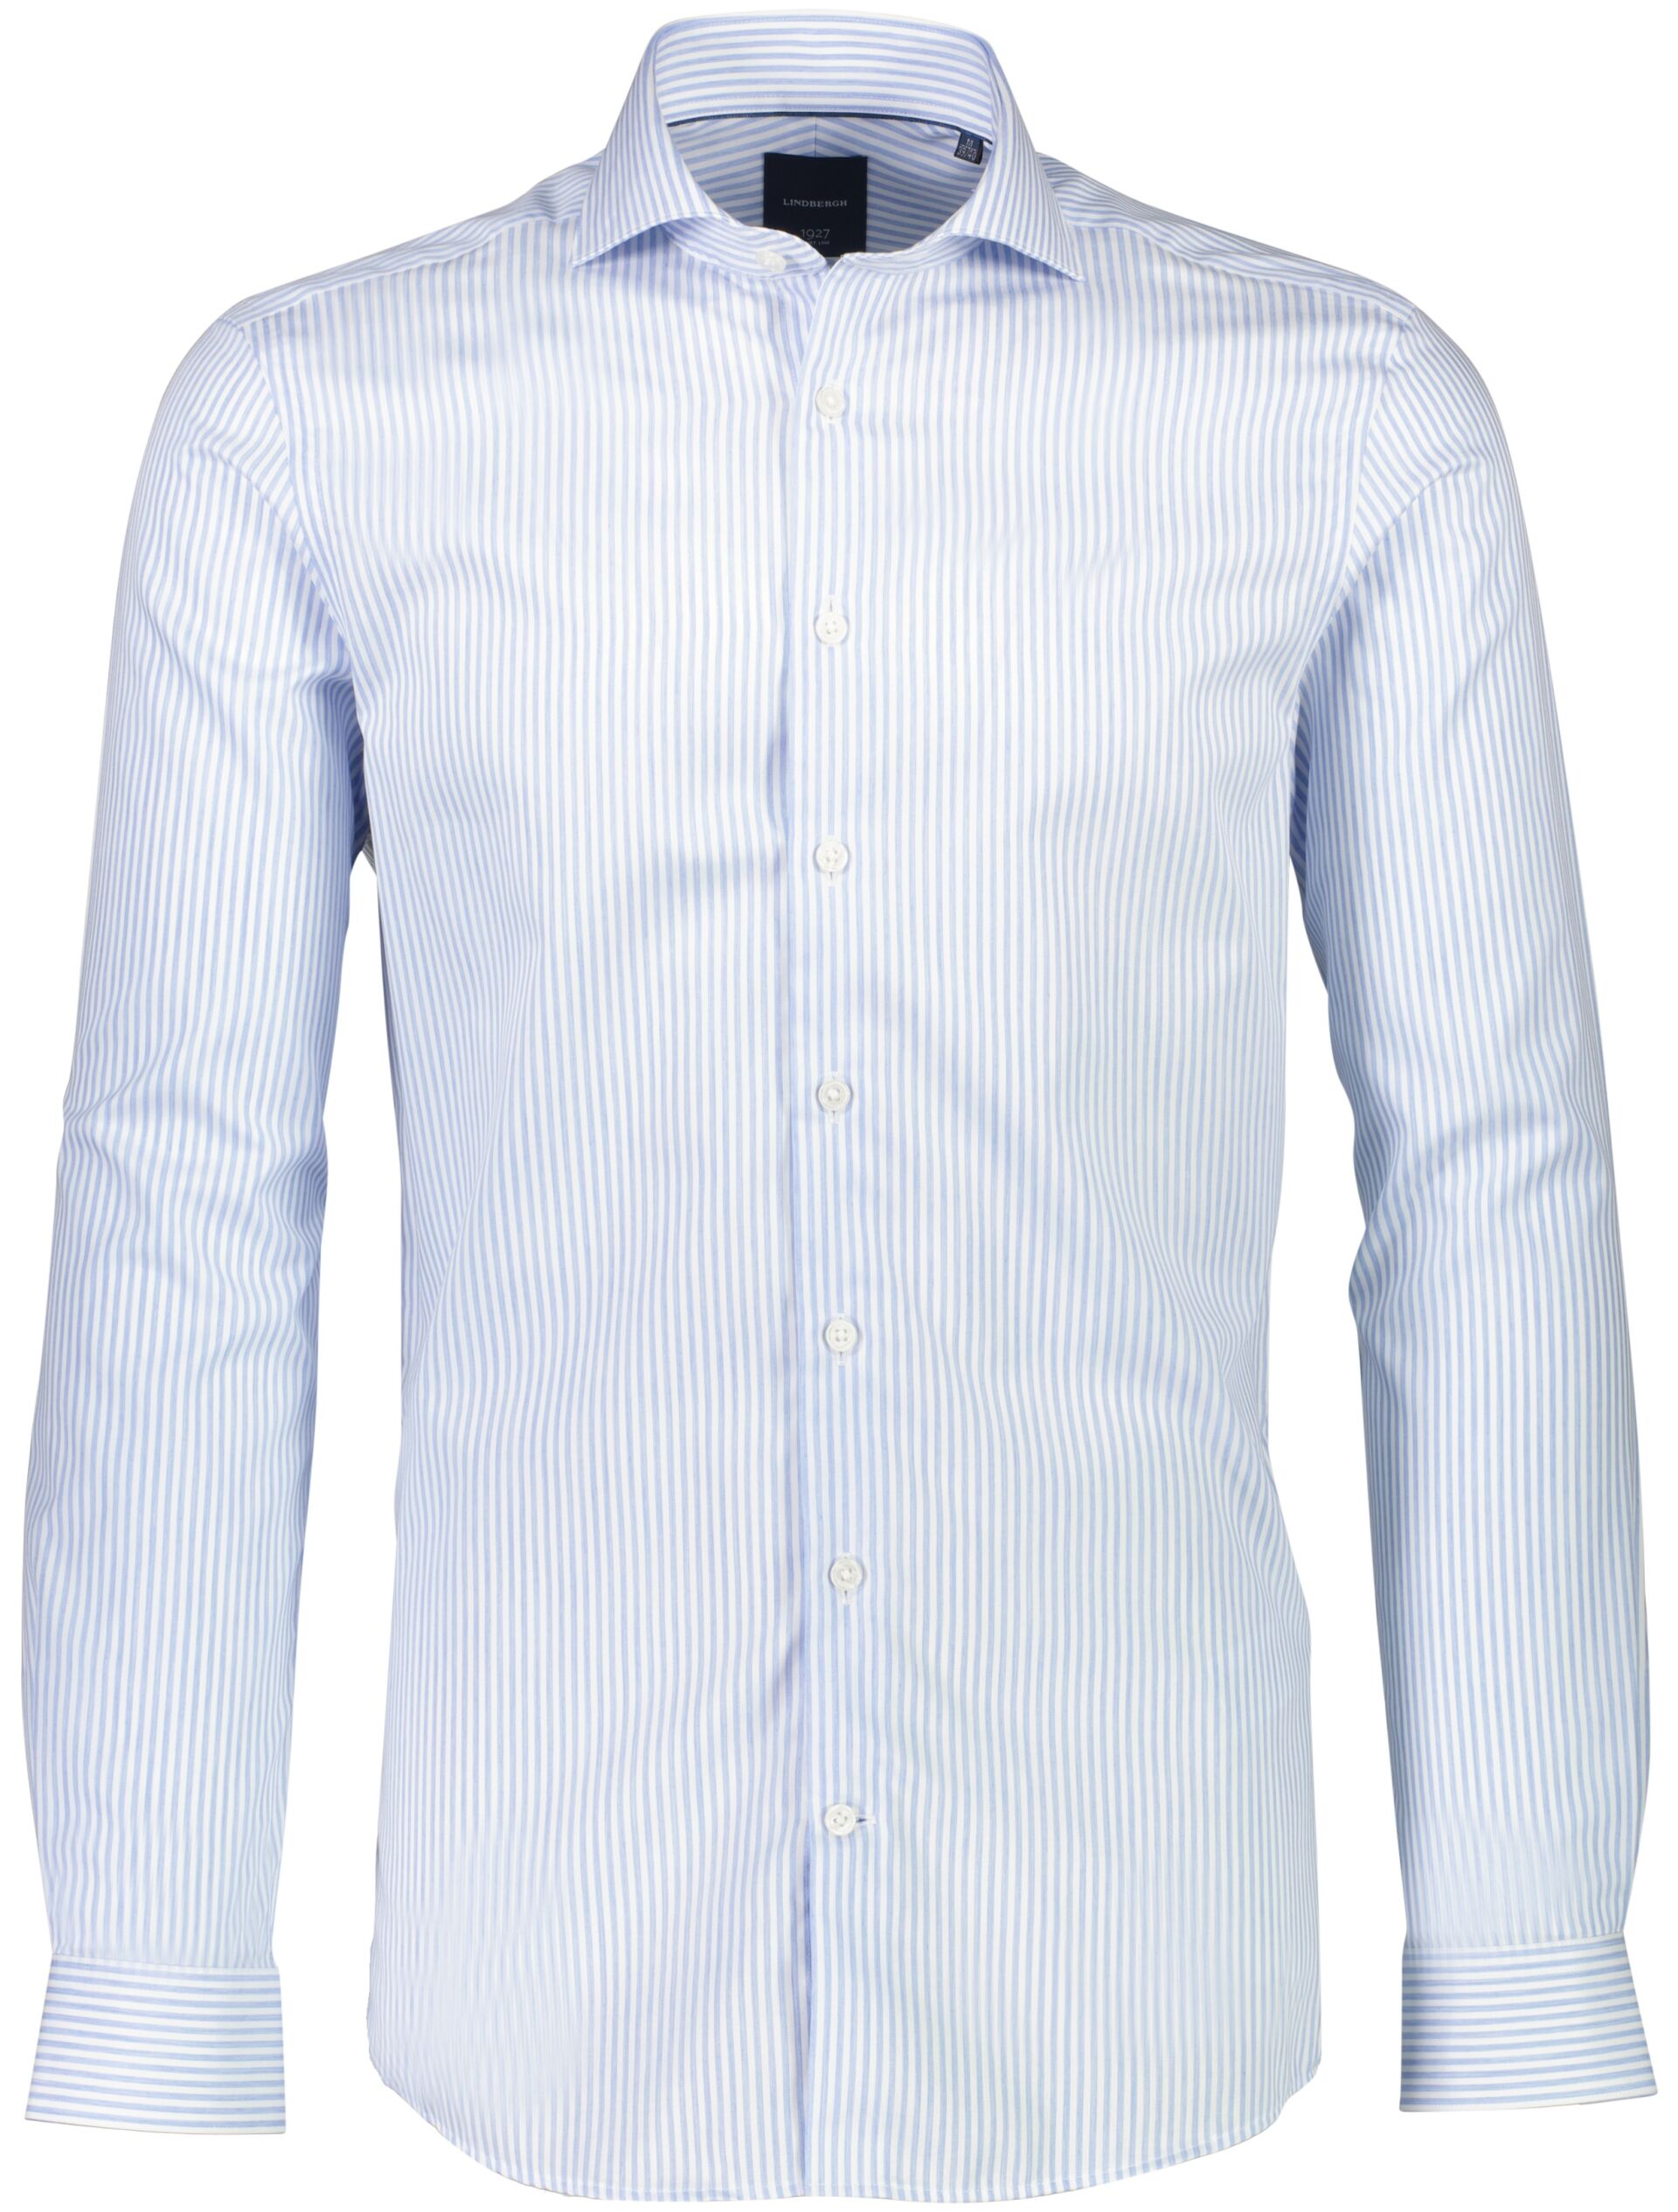 1927 Business casual shirt 30-247170